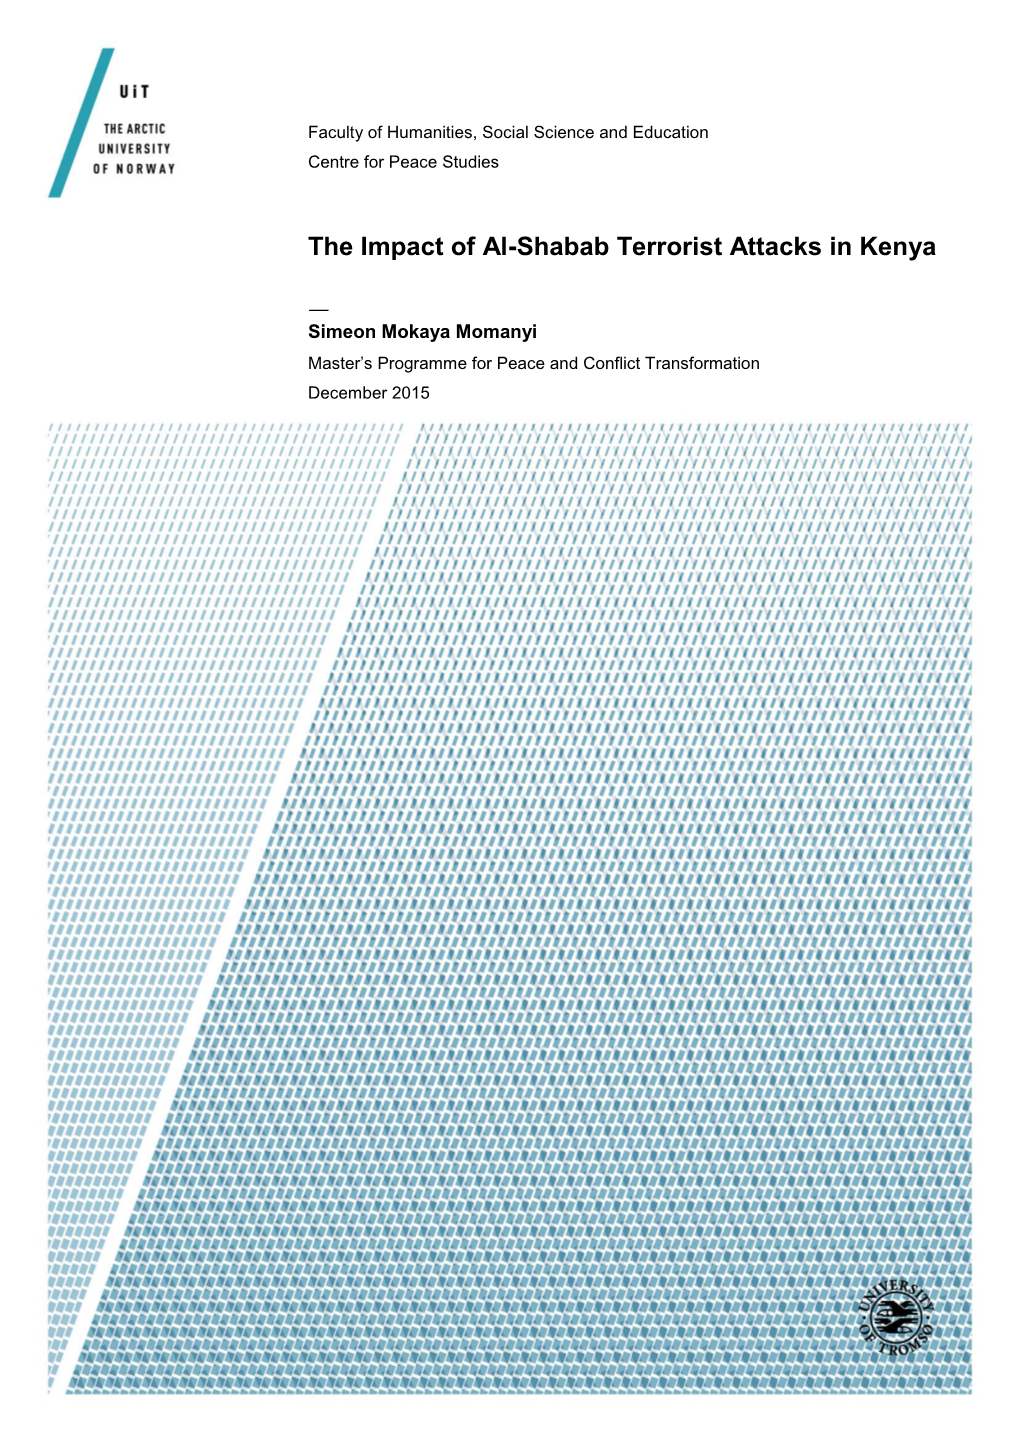 The Impact of Al-Shabab Terrorist Attacks in Kenya